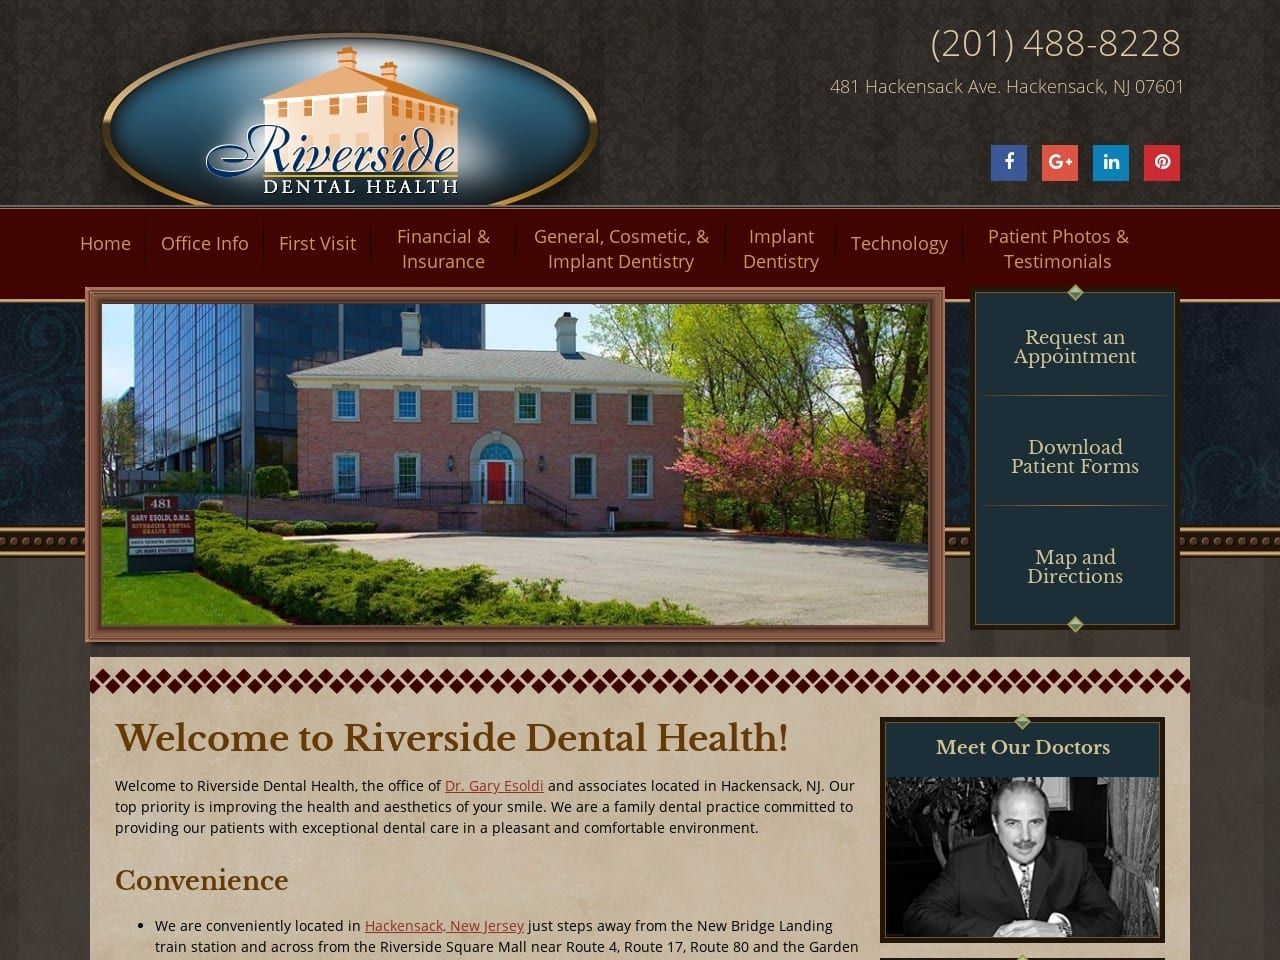 Riverside Dental Health Website Screenshot from riversidedentalhealth.com